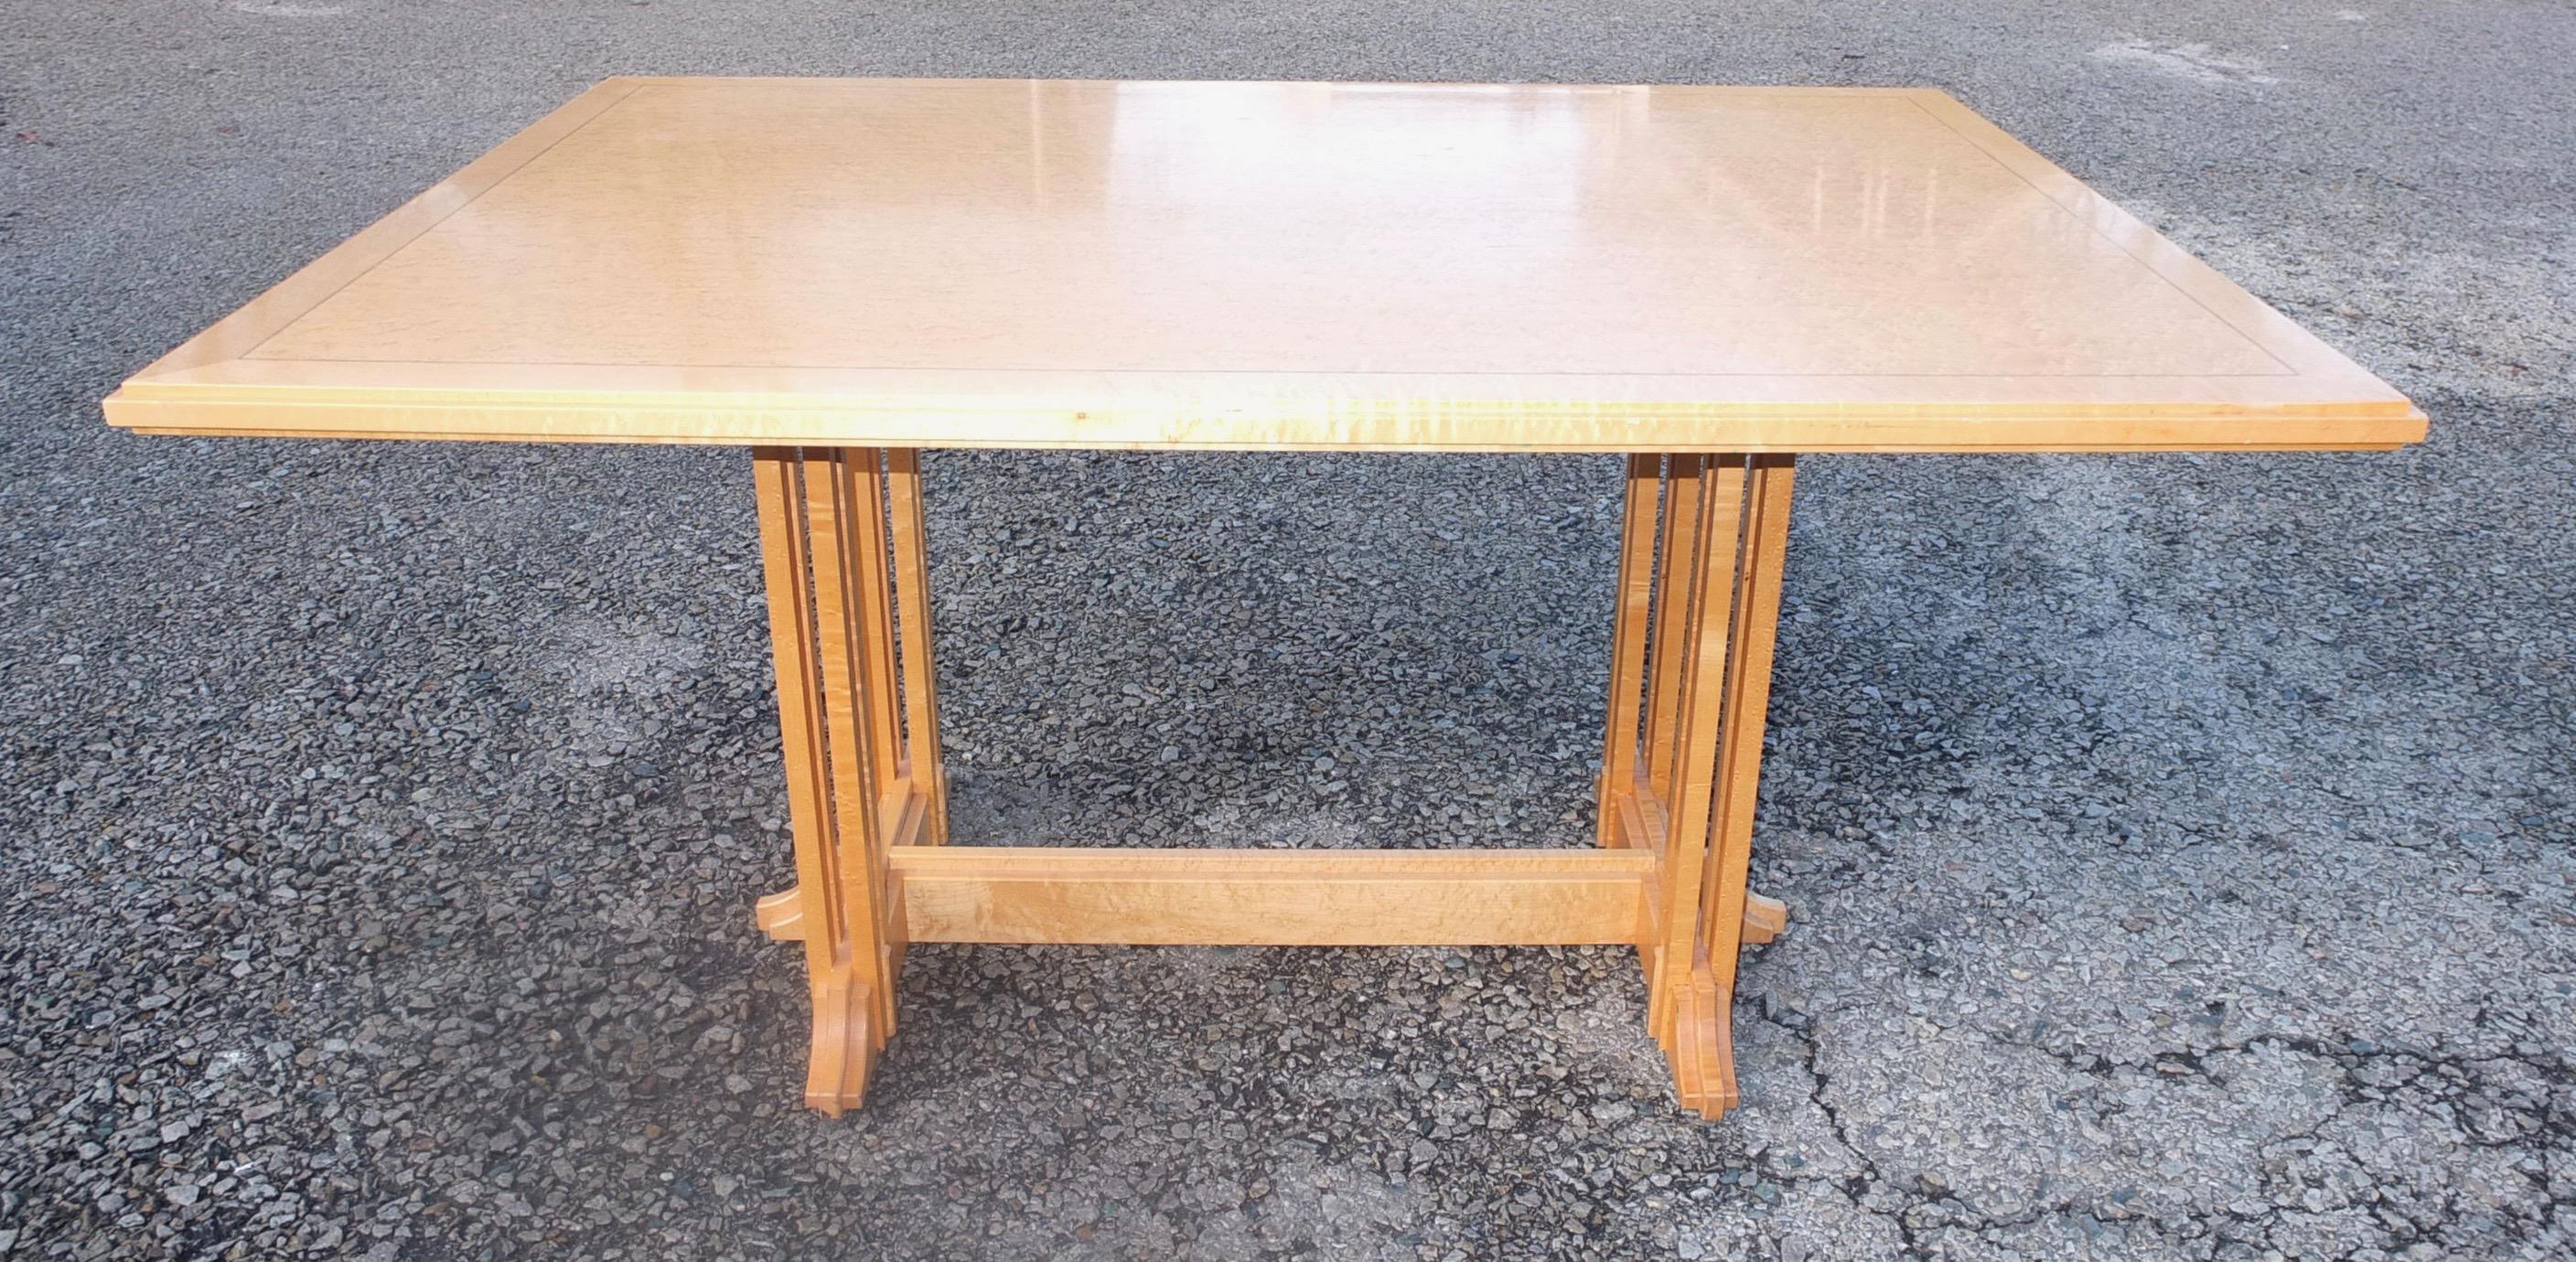 Gregg Lipton Studio Craft Trestle Table For Sale 6